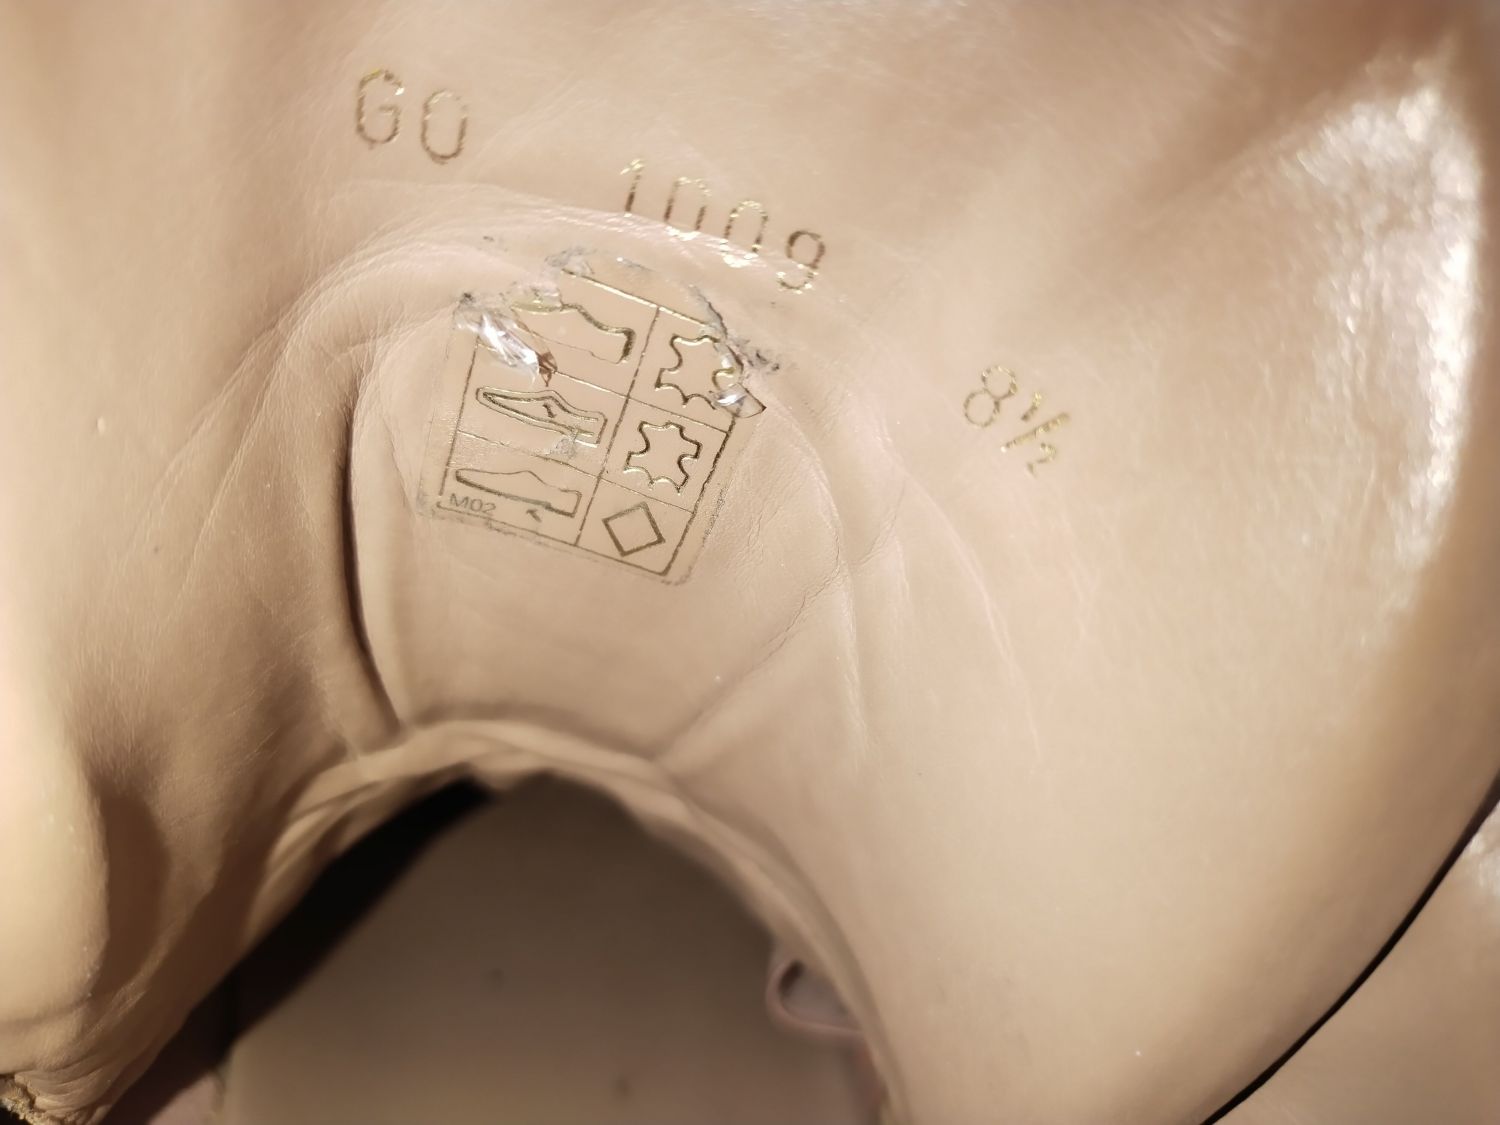 Louis Vuitton Jaspers Kanye Patchwork Zen Grey Pink